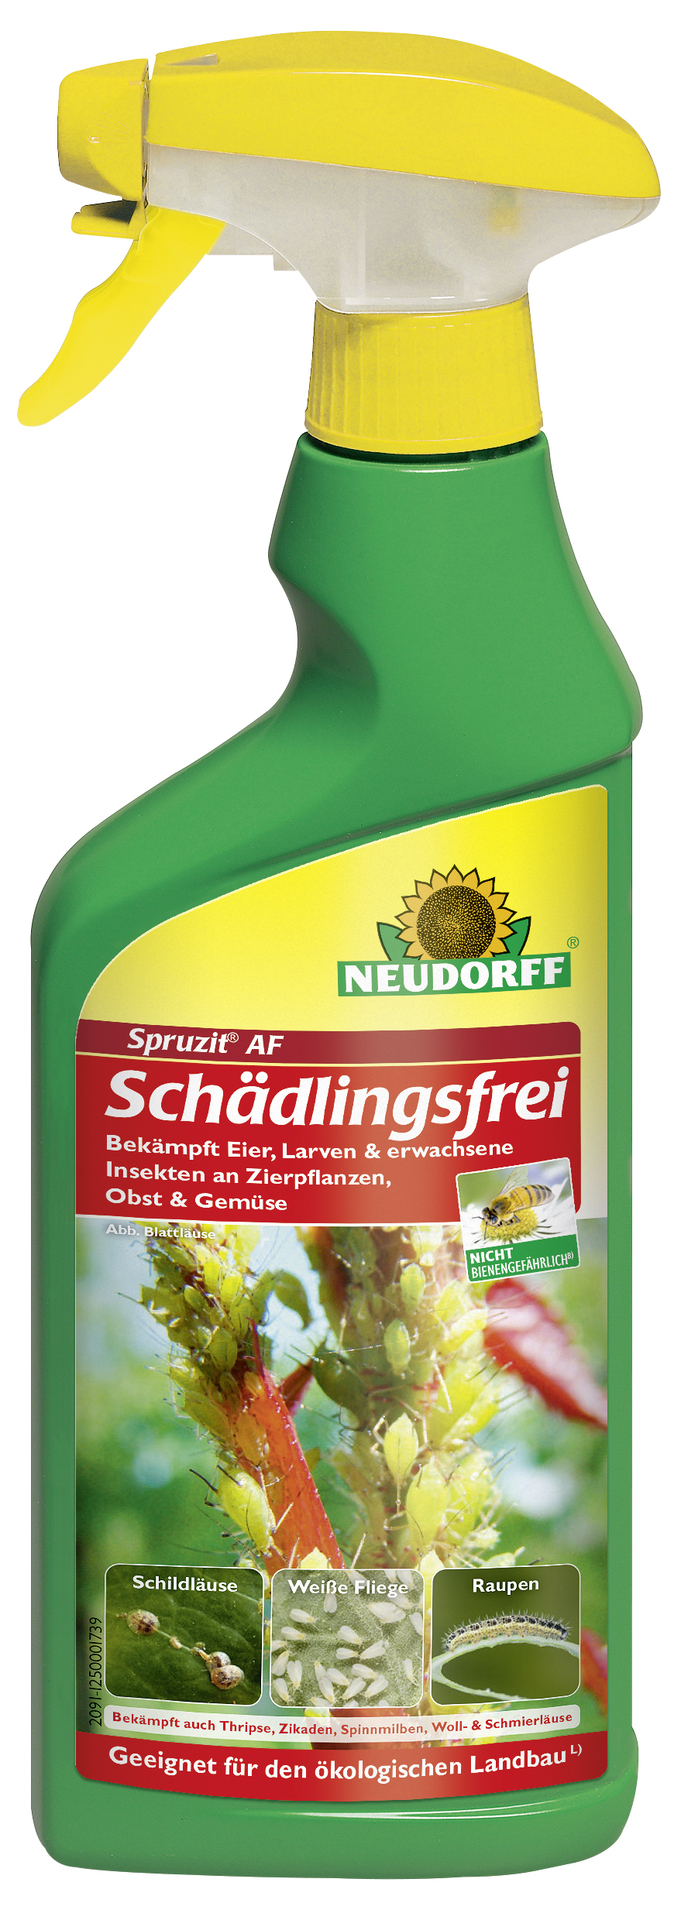 W. Neudorff GmbH KG Spruzit AF Schädlingsfrei